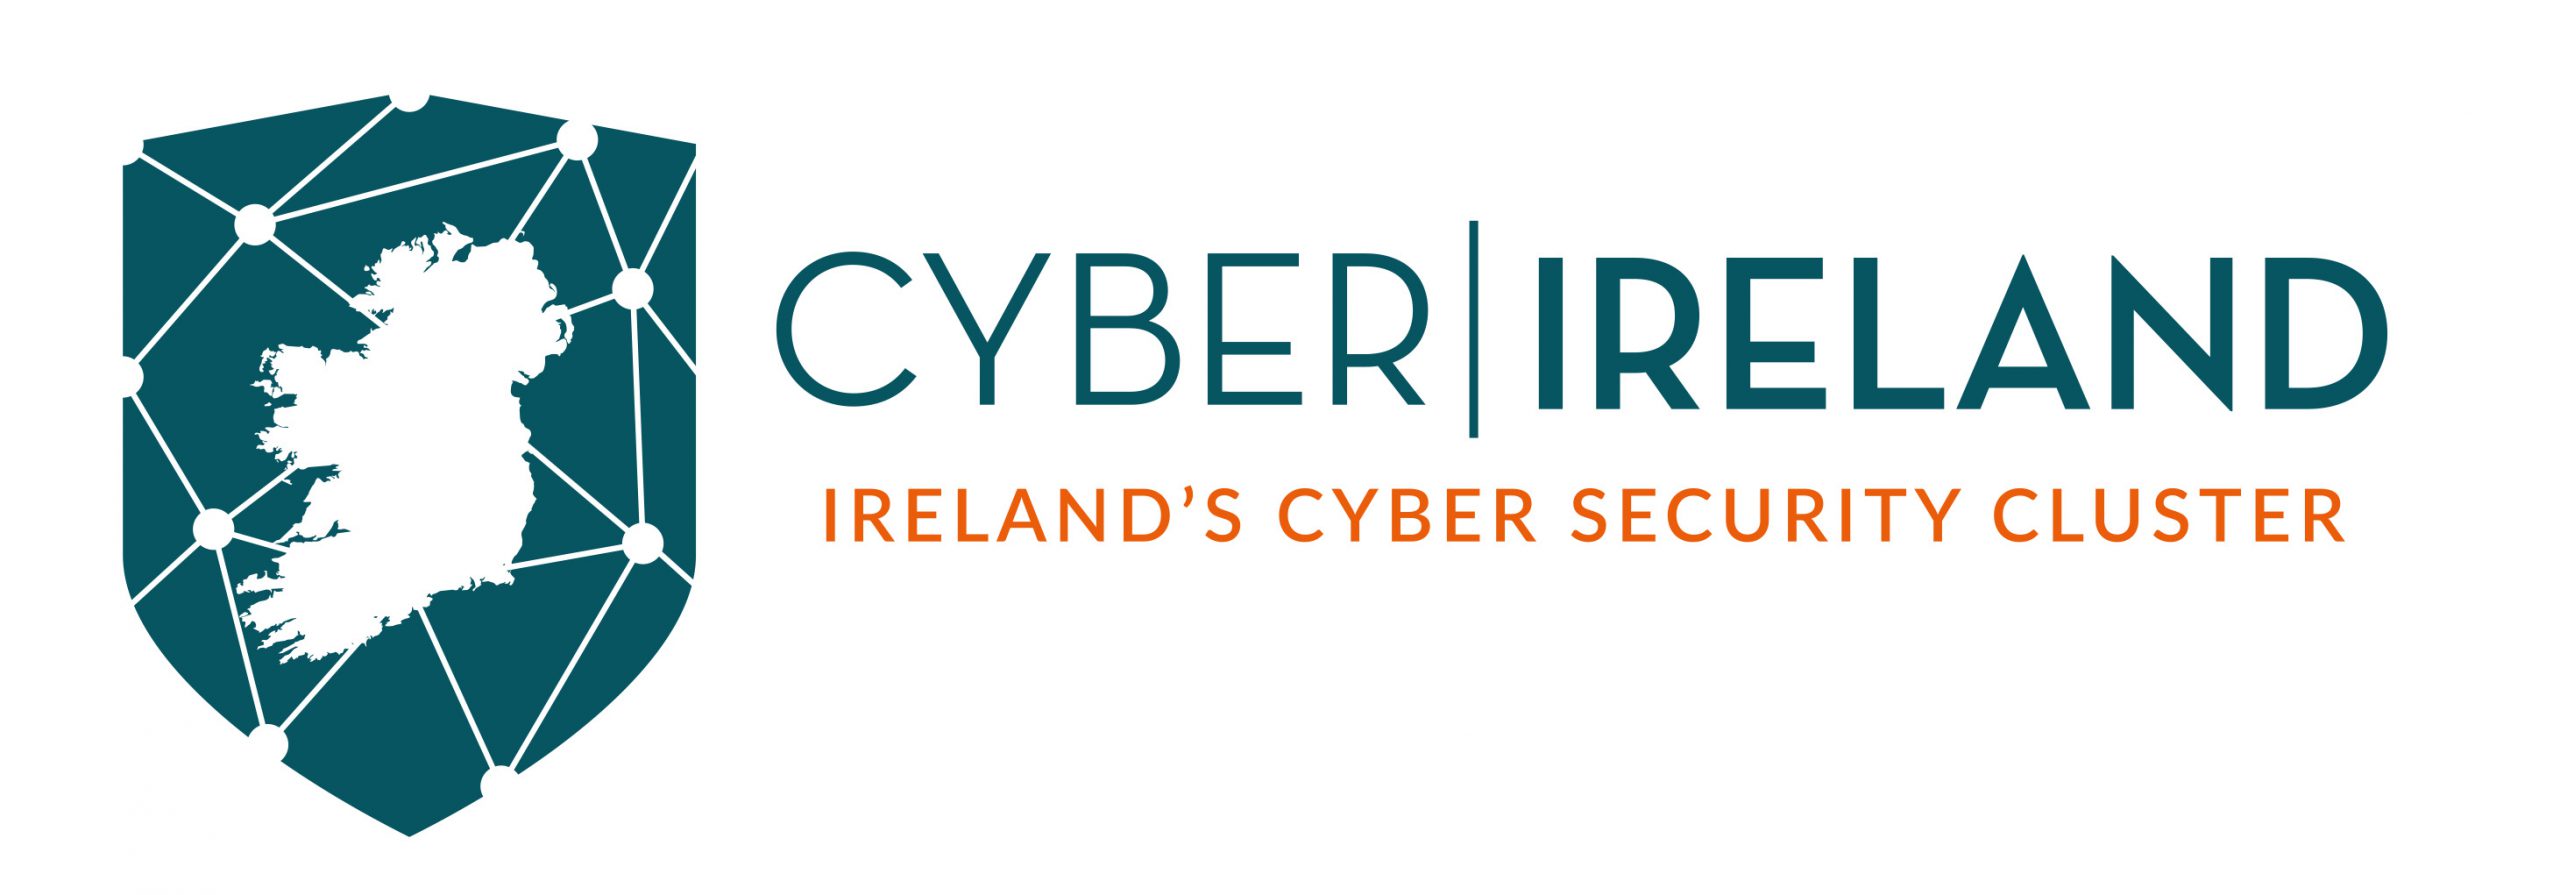 Cyber Ireland Logo